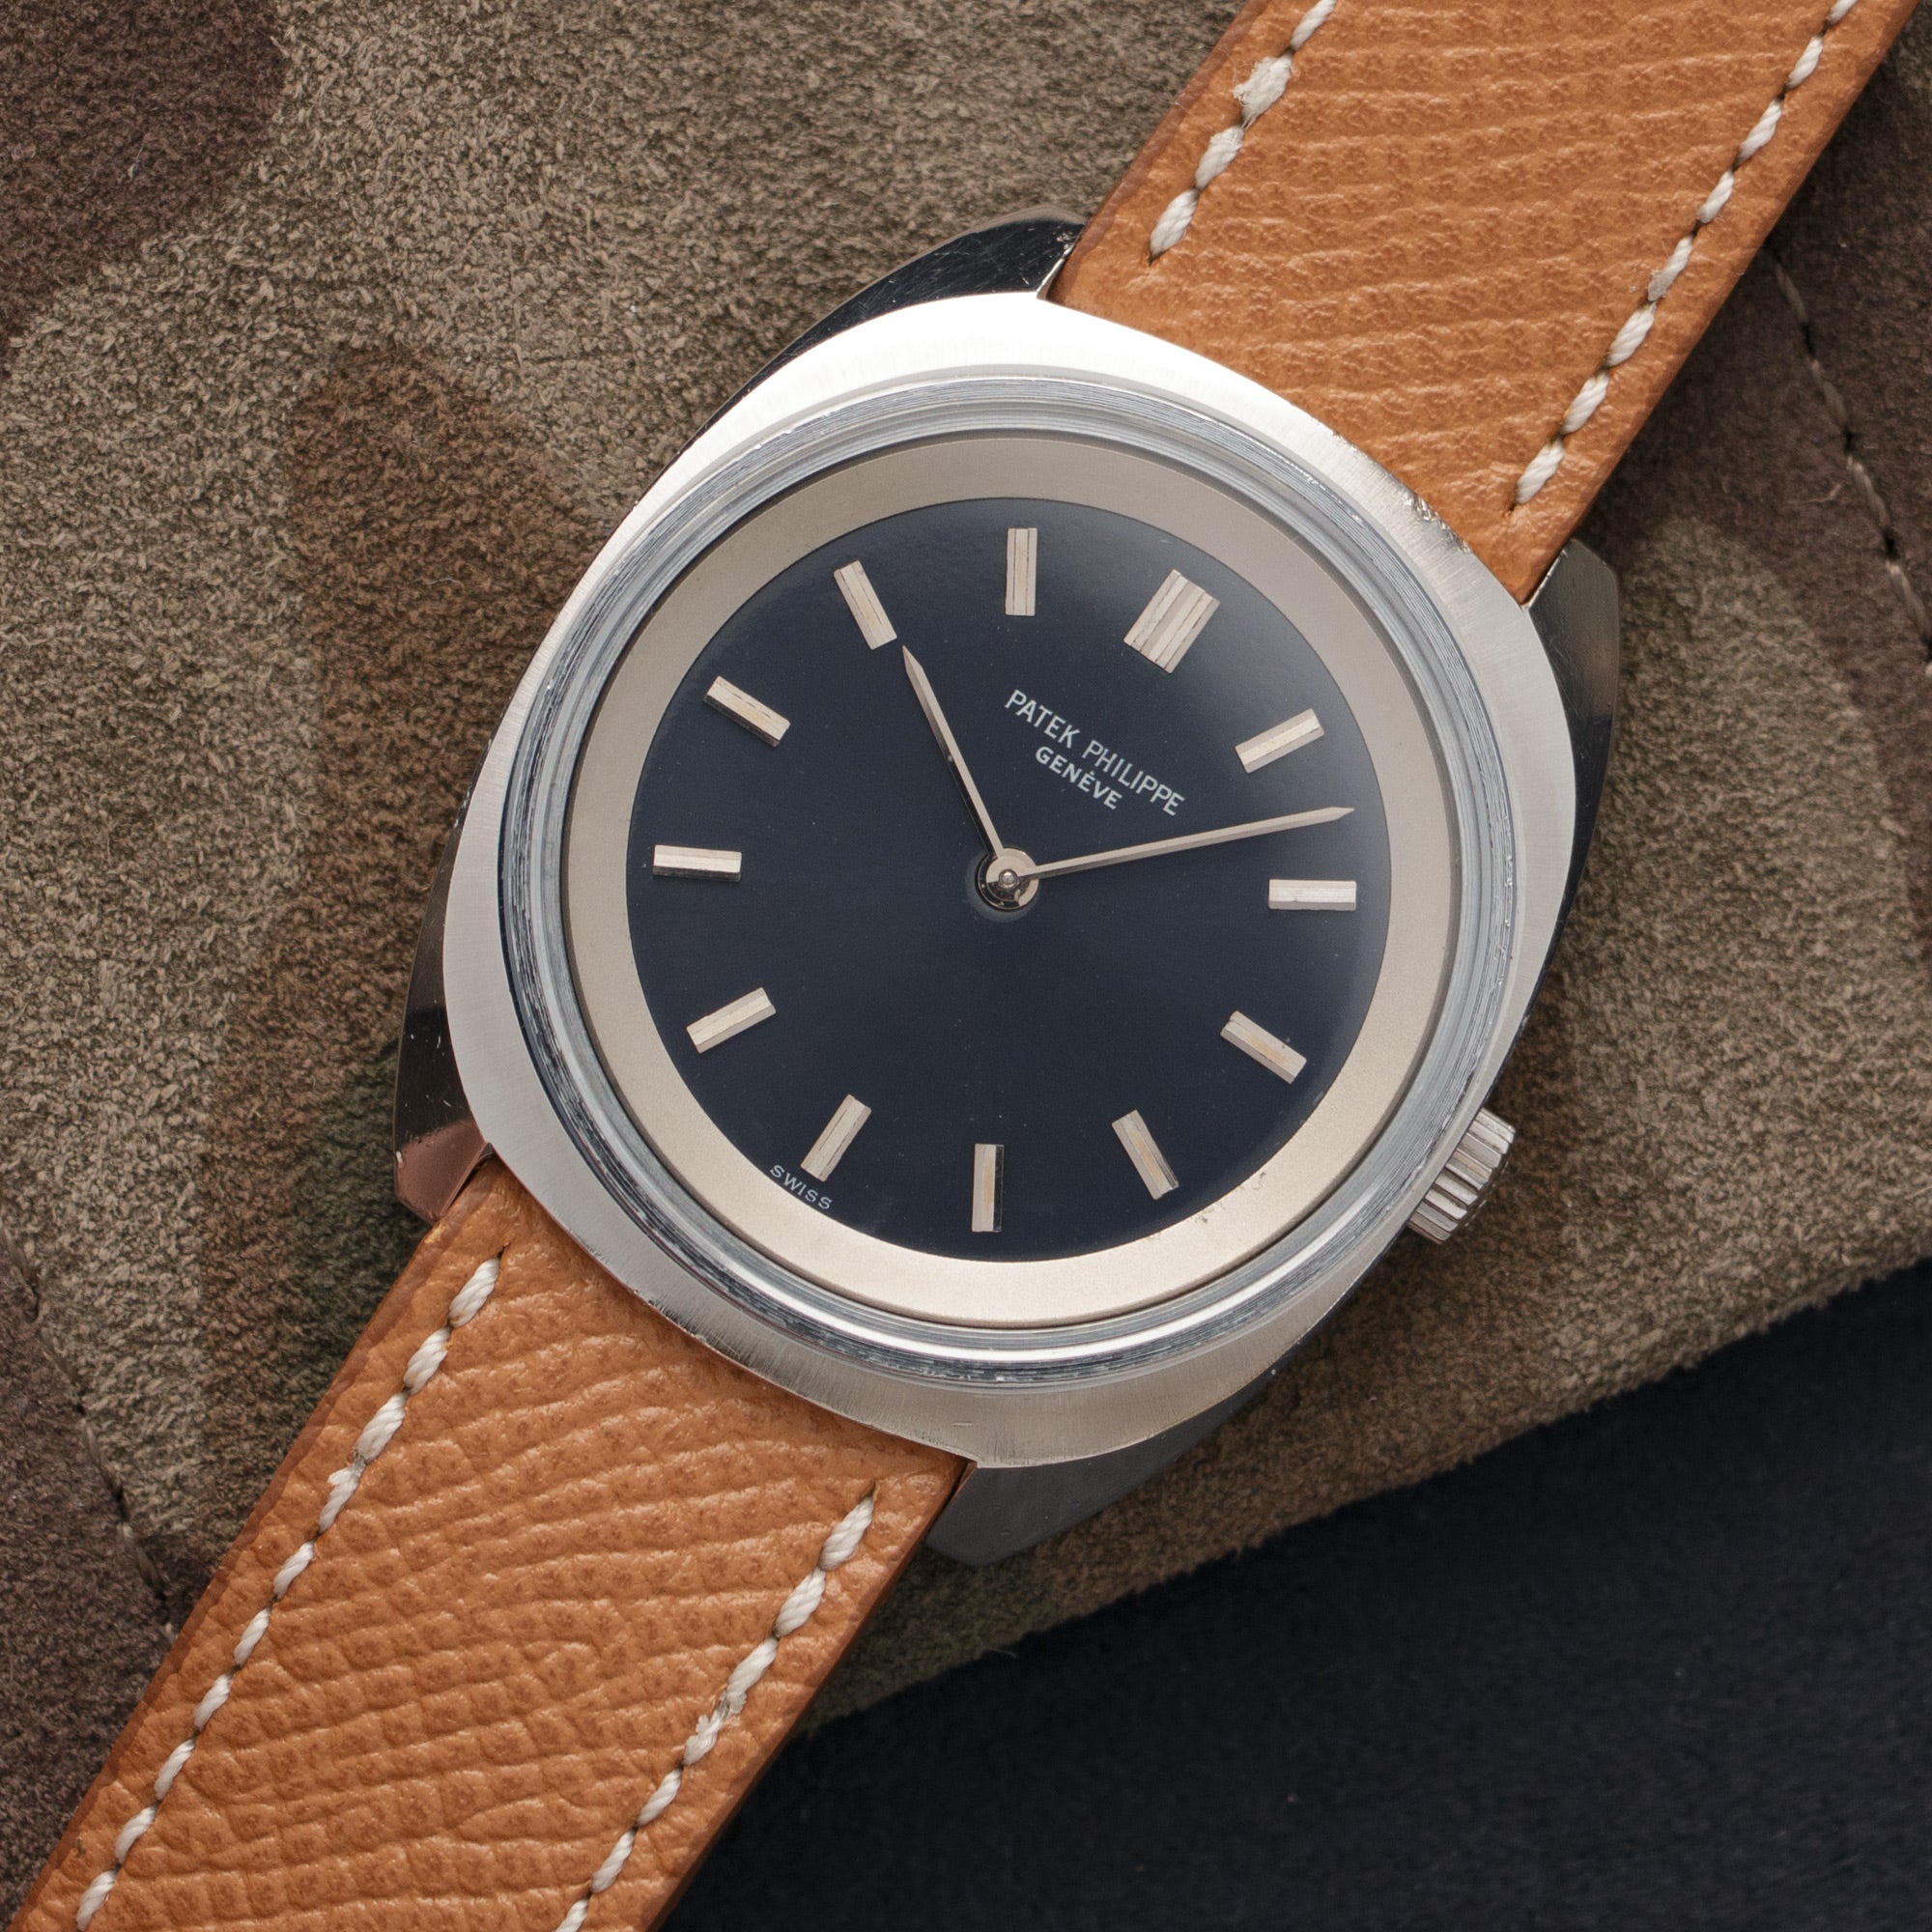 Patek Philippe - Patek Philippe Steel Tonneau-Shaped Watch Ref. 3579 - The Keystone Watches